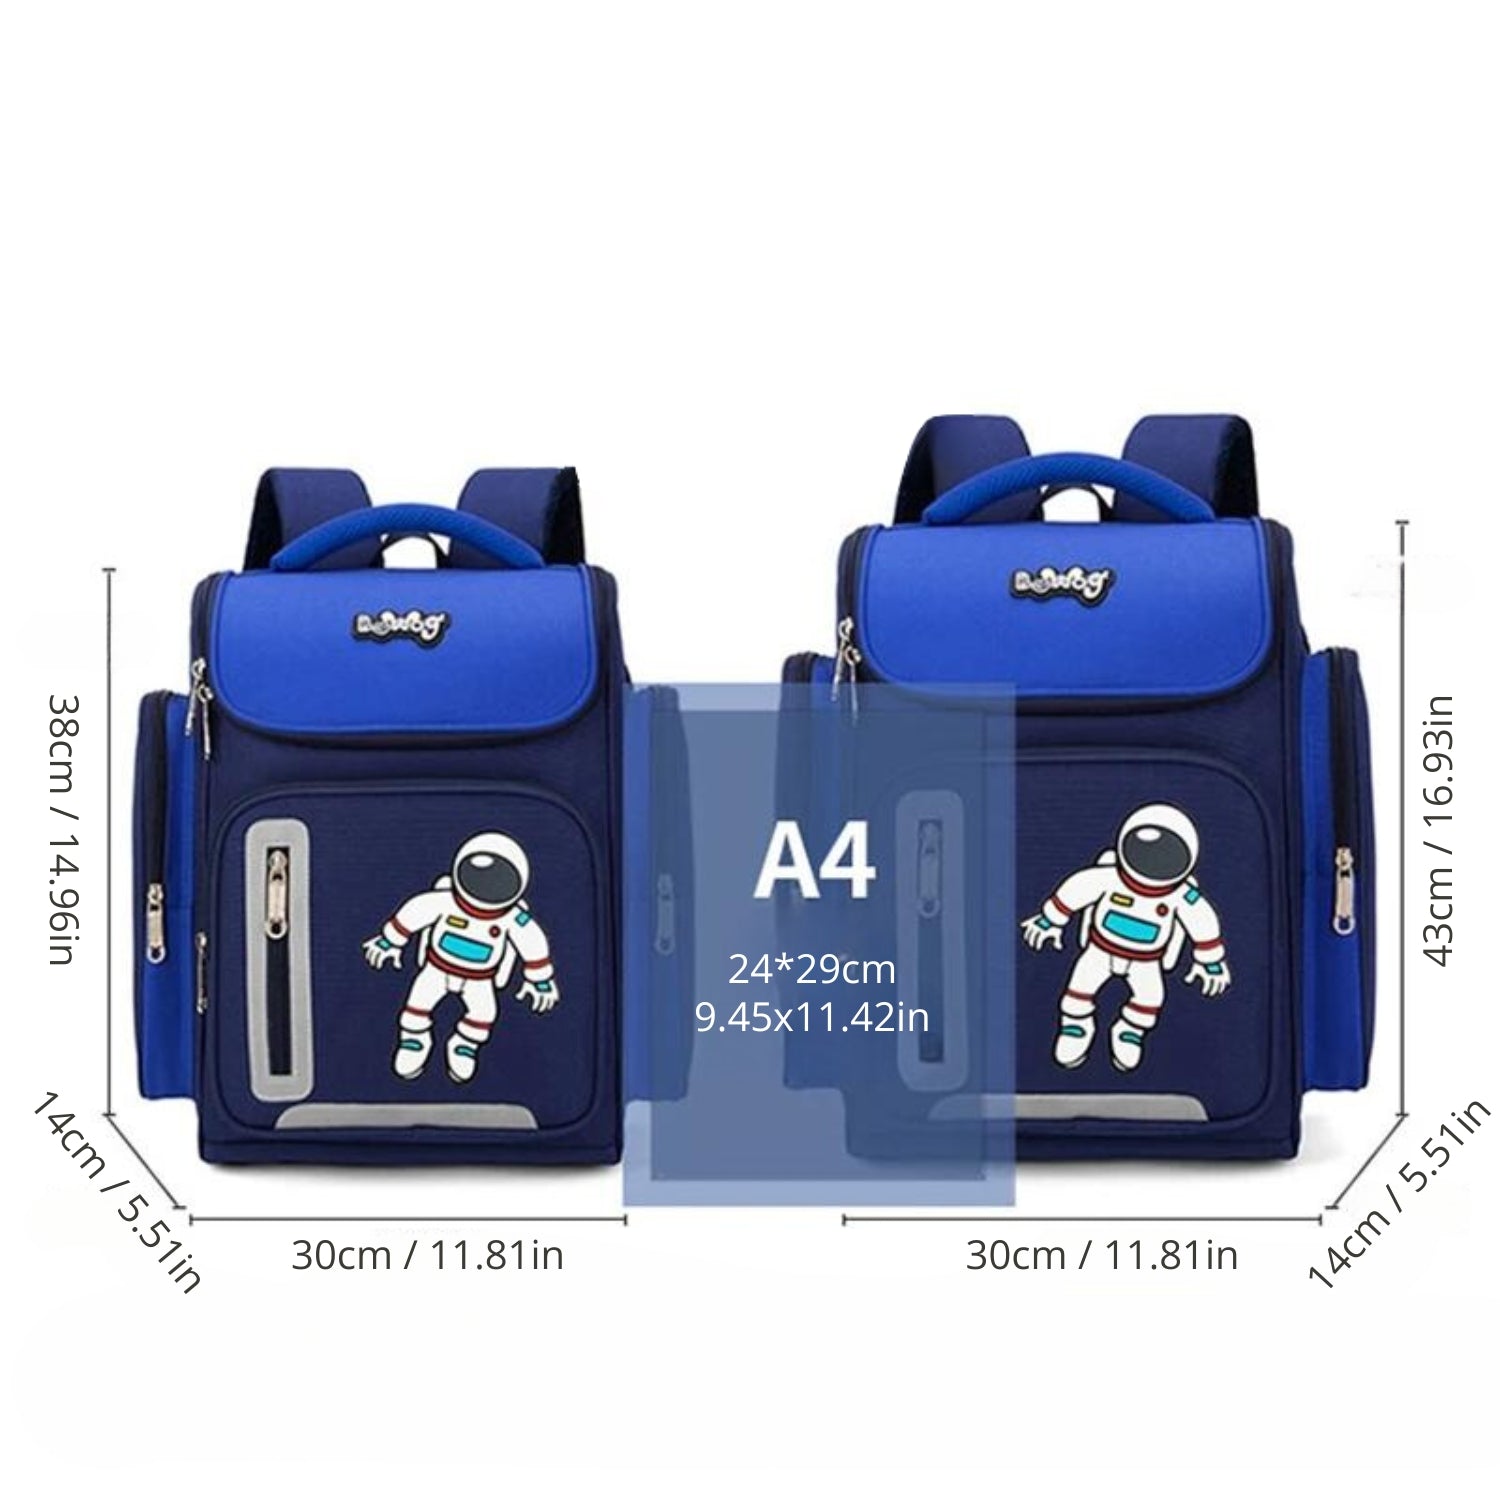 Space Explorer Backpack Set - Intergalactic Adventure Pack